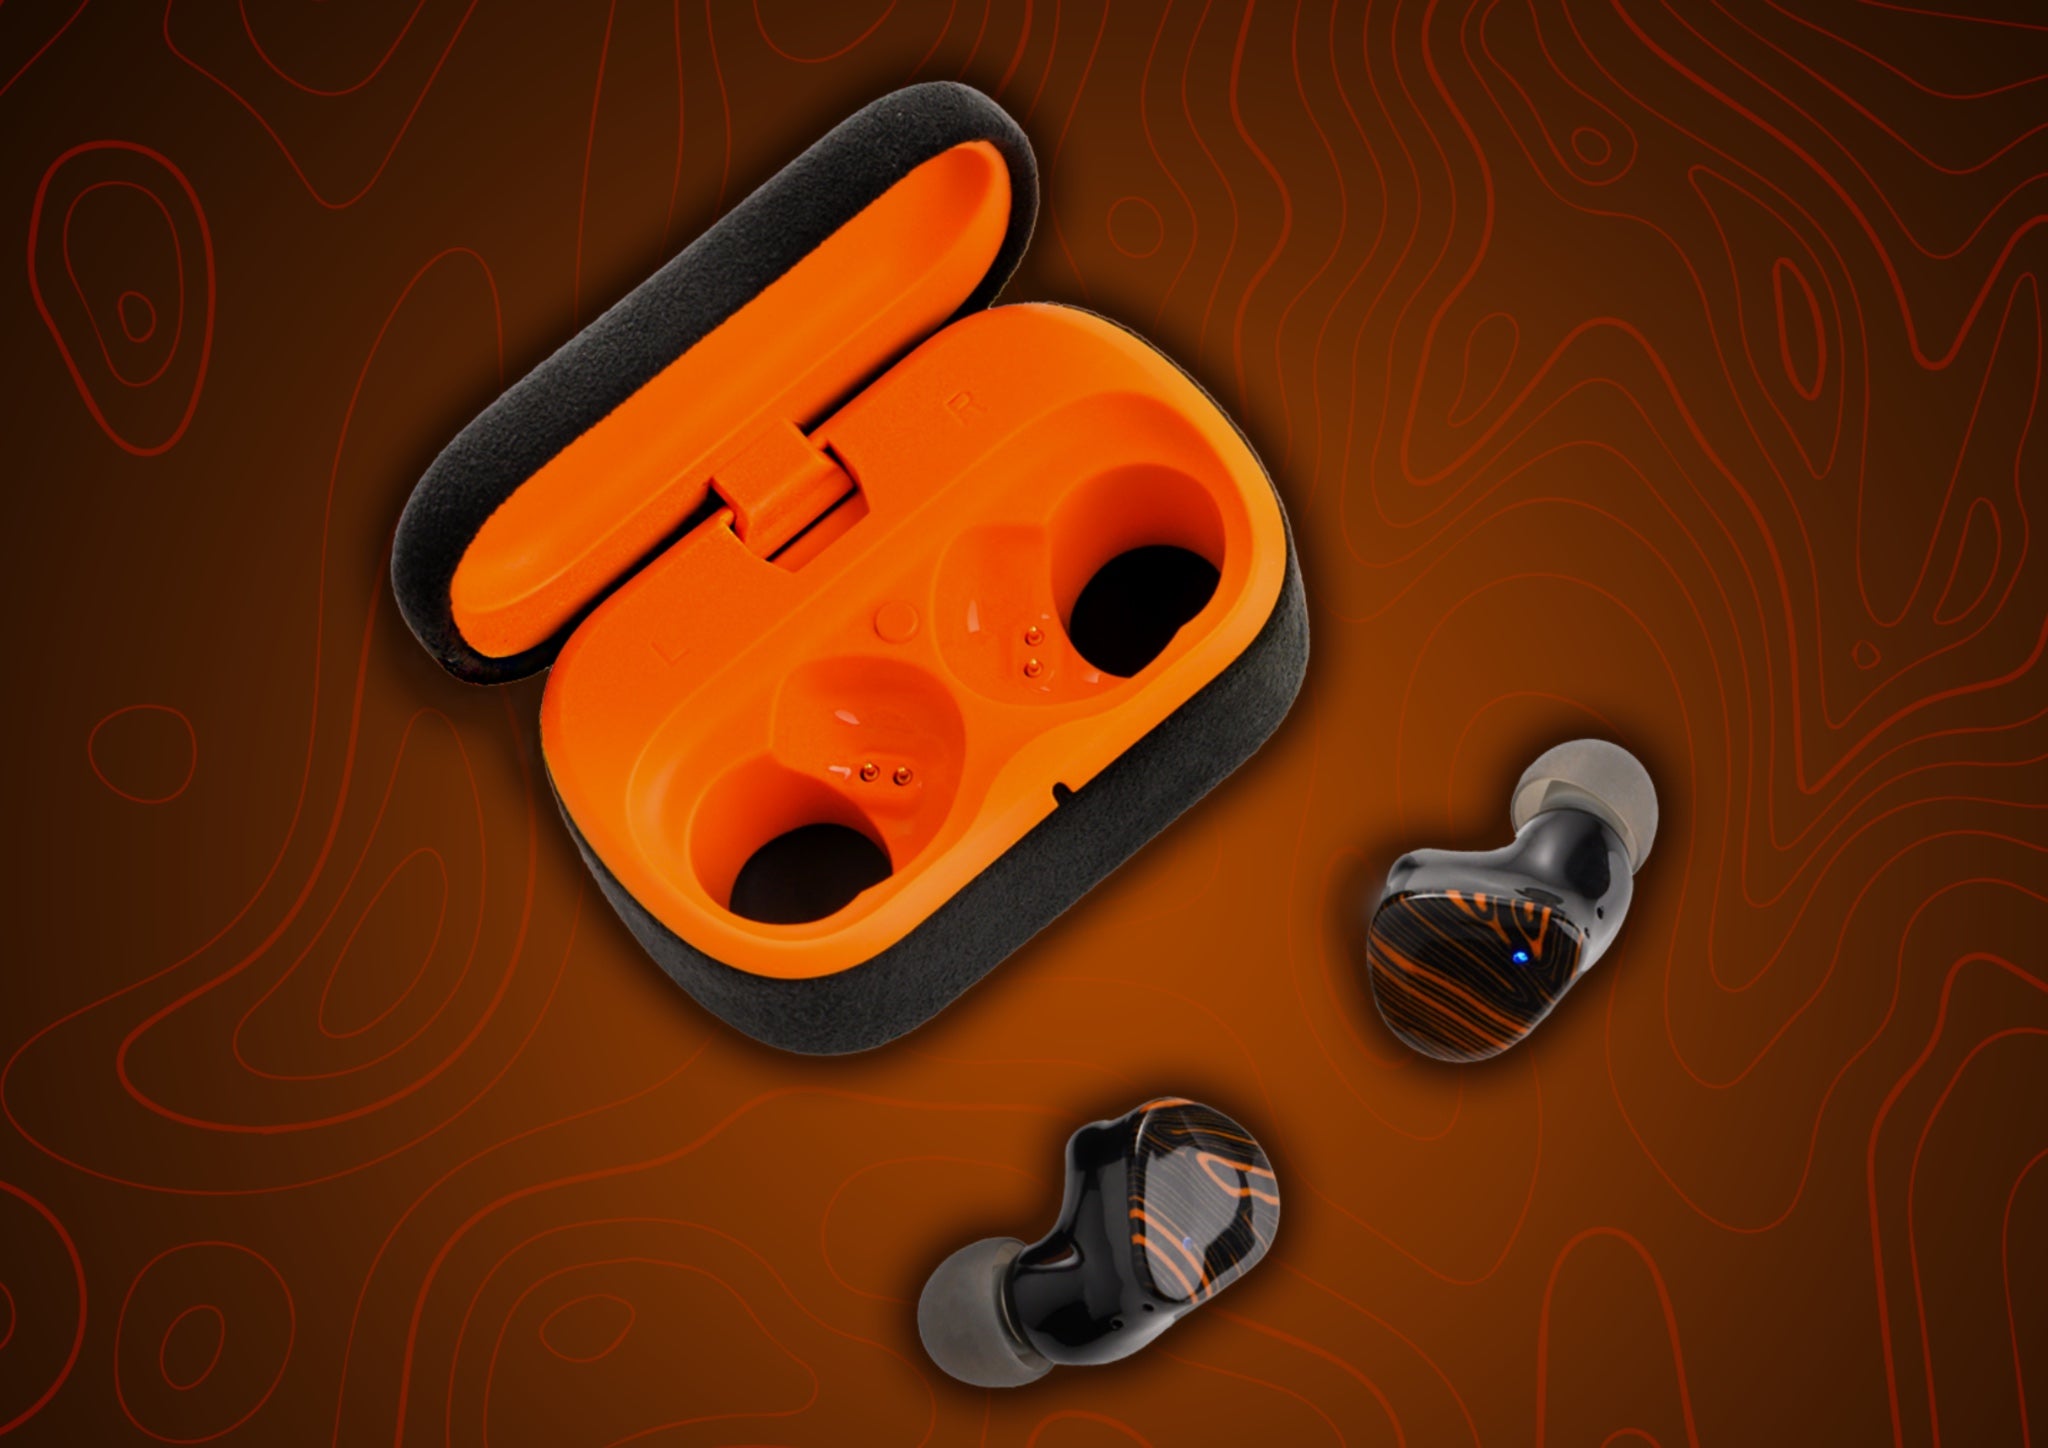 Noble FoKus Triumph open case with earphones bird's eye over orange swirl background